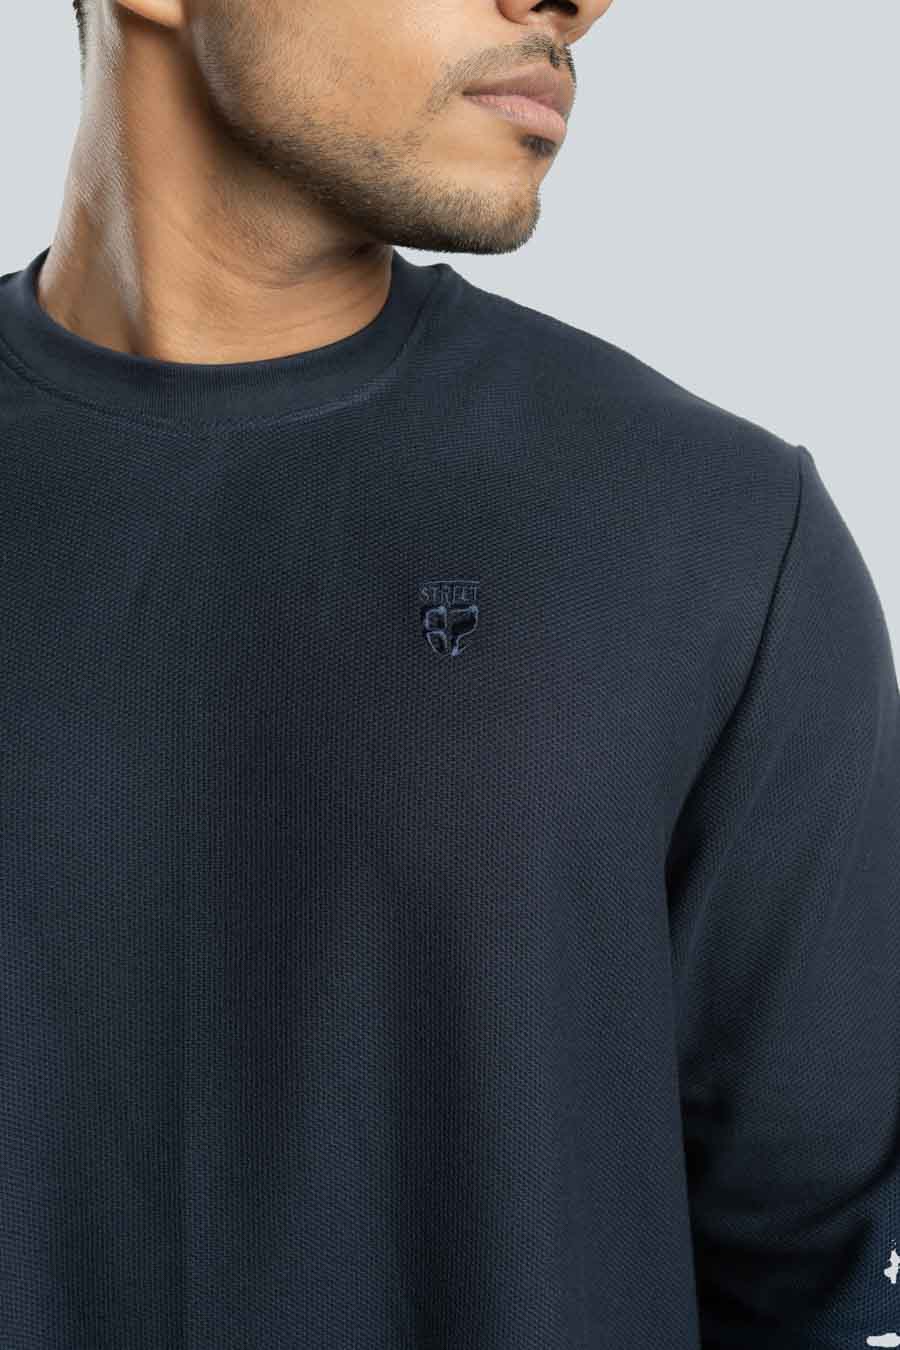 Jacquard crew neck Long sleeve Plain staple color Unisex t-shirt